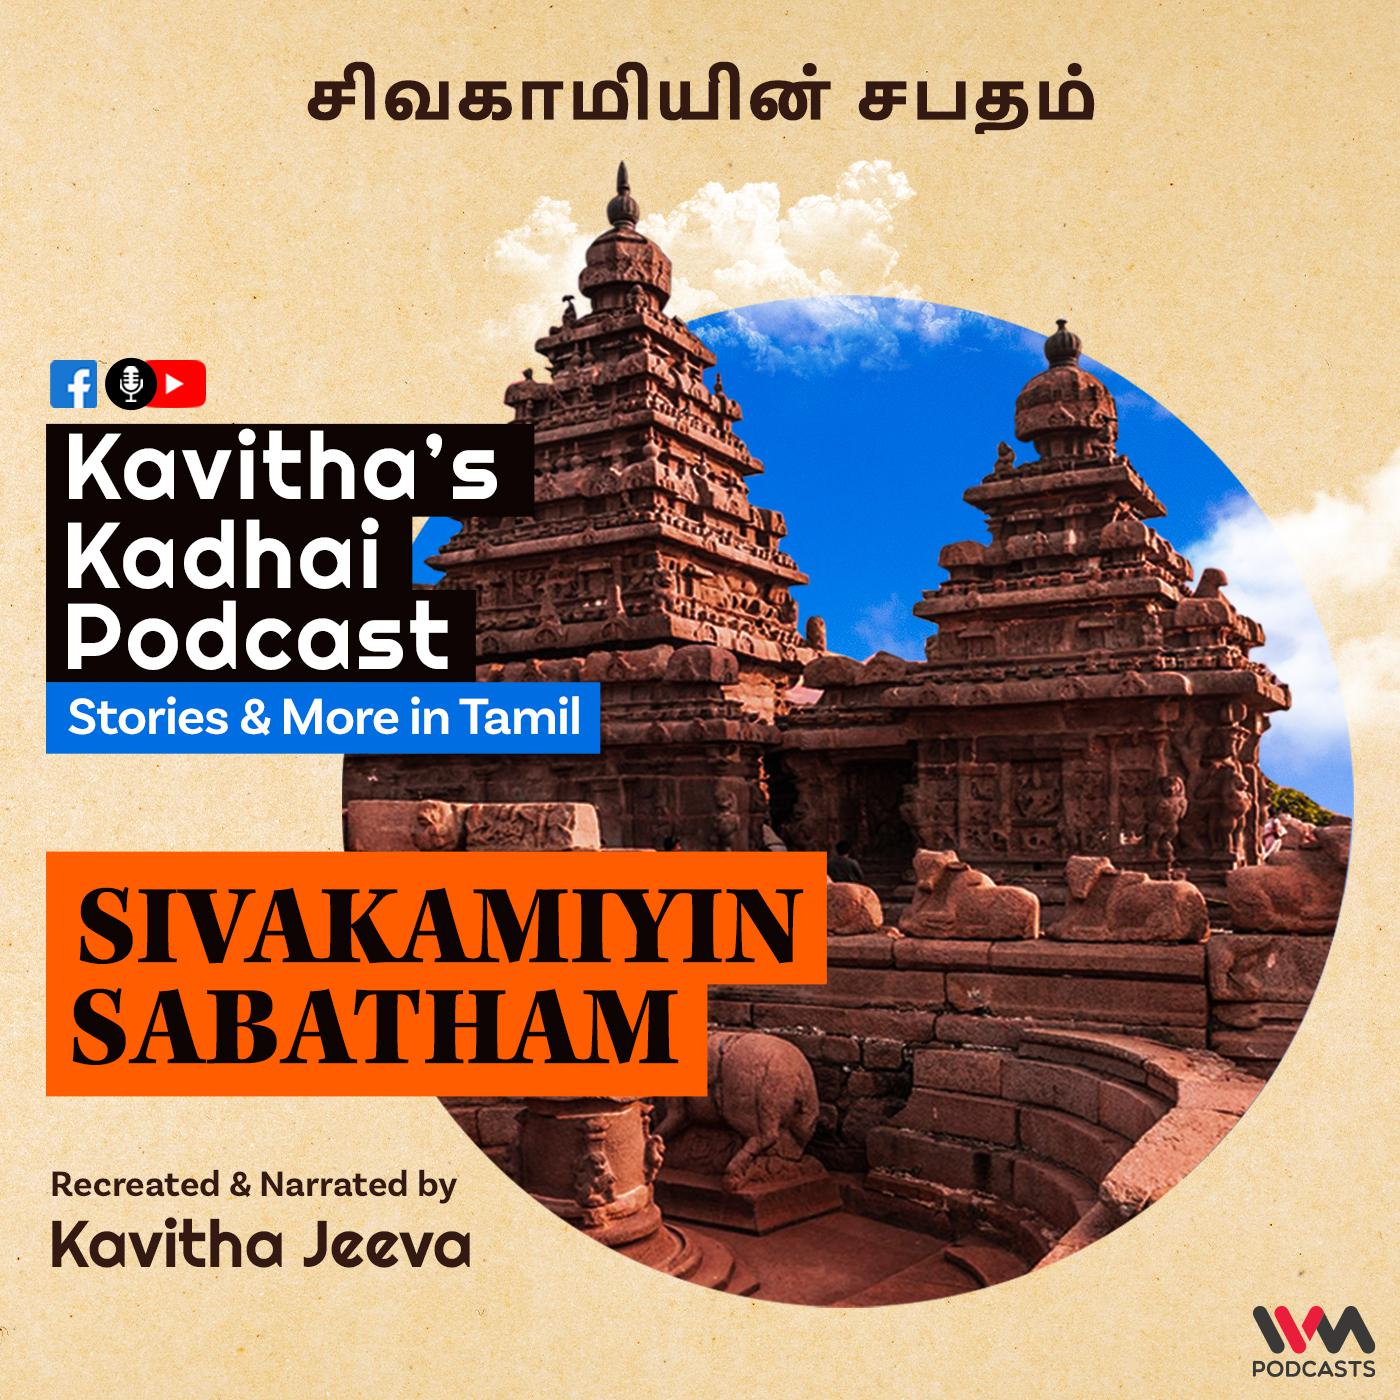 KadhaiPodcast's Sivakamiyin Sabatham with Kavitha Jeeva - Episode #145